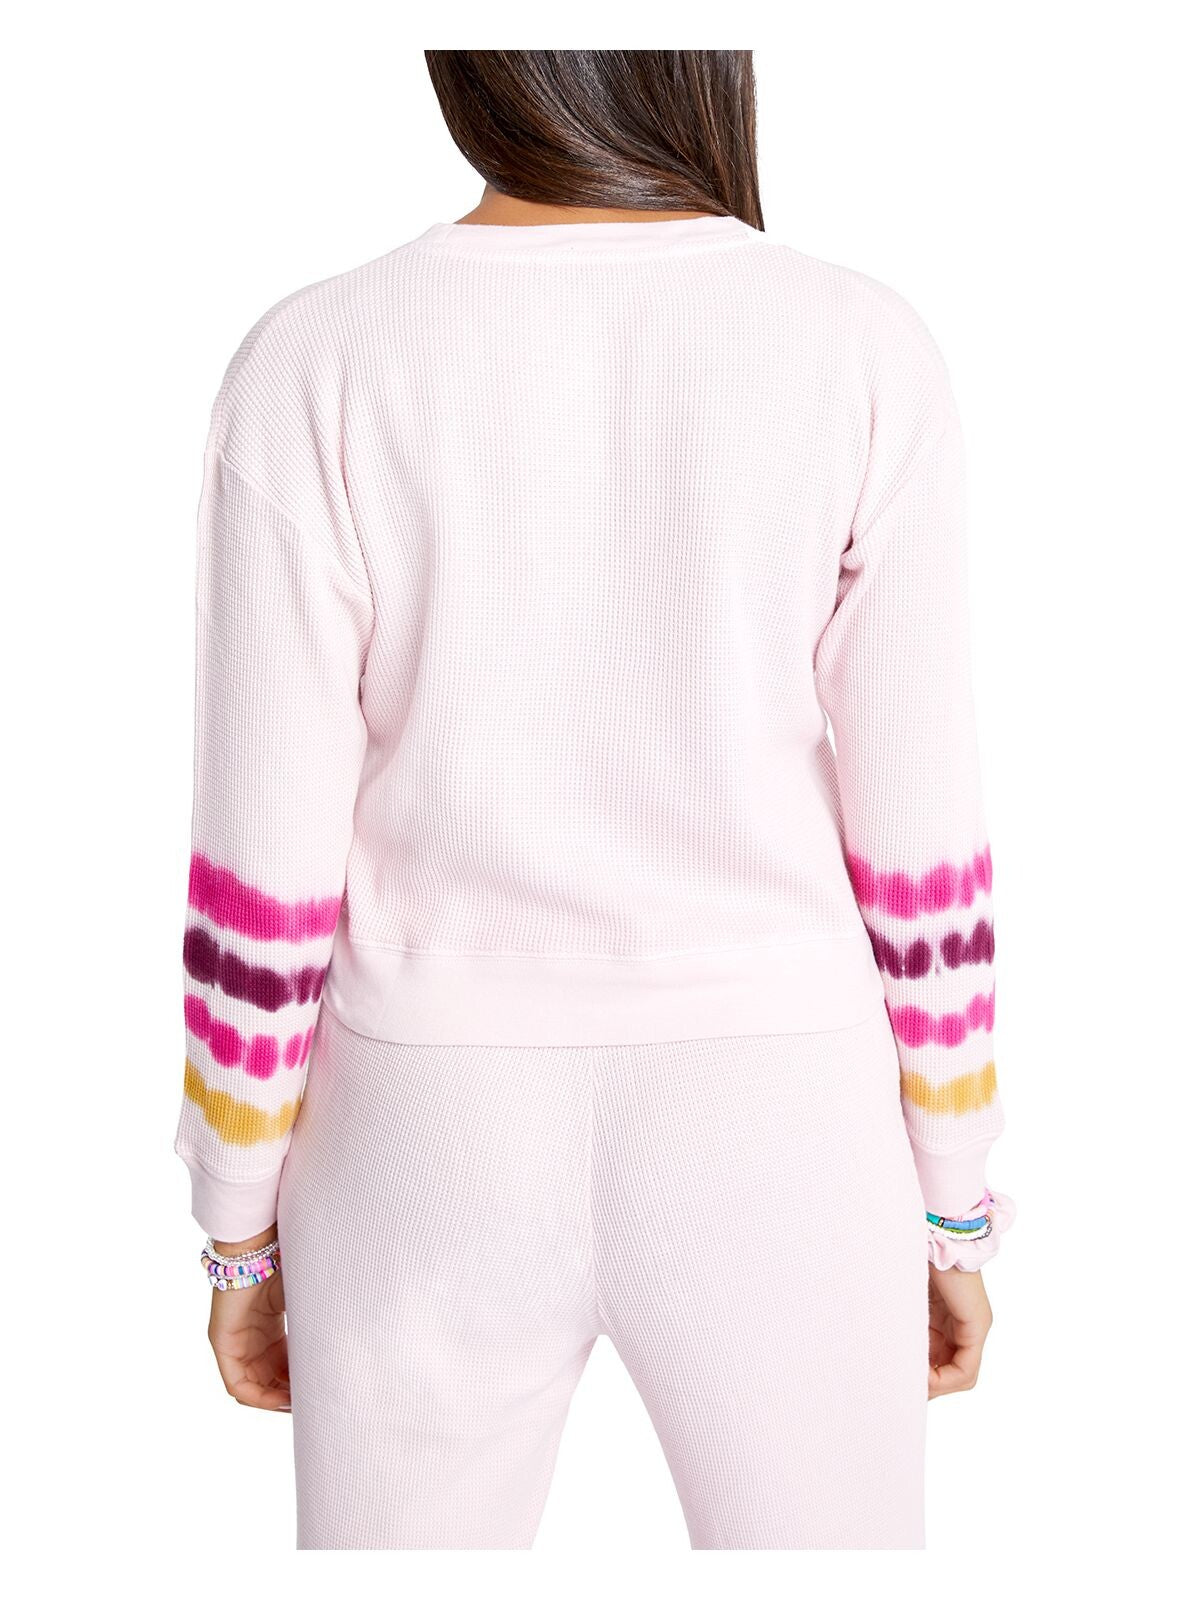 SUNDOWN BY SPLENDID Womens Pink Long Sleeve Crew Neck Top XL